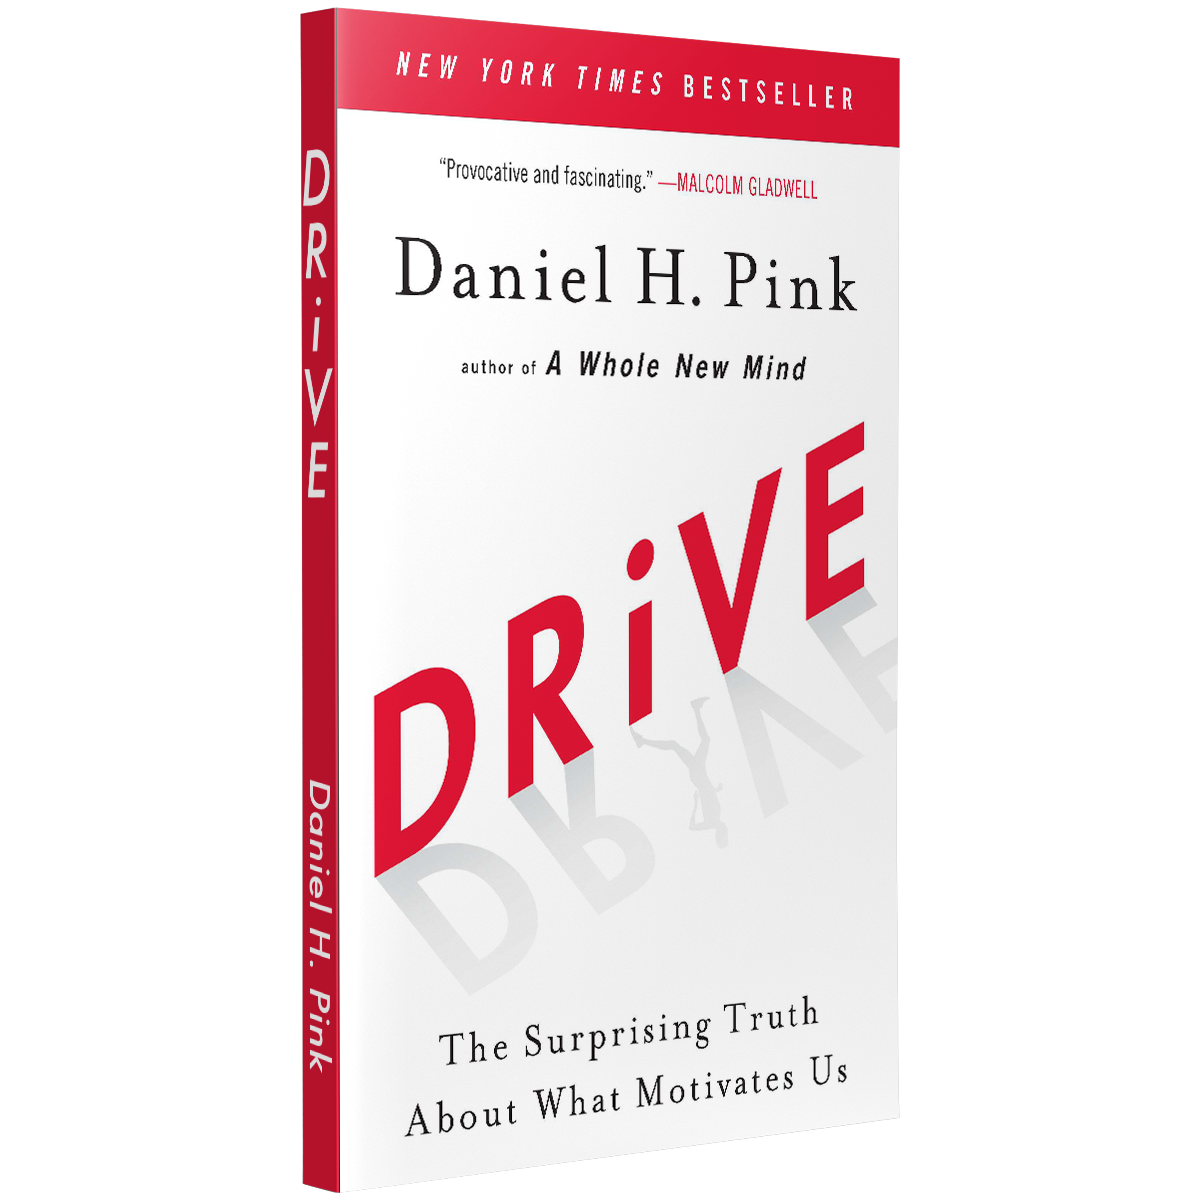 Drive by Dan Pink